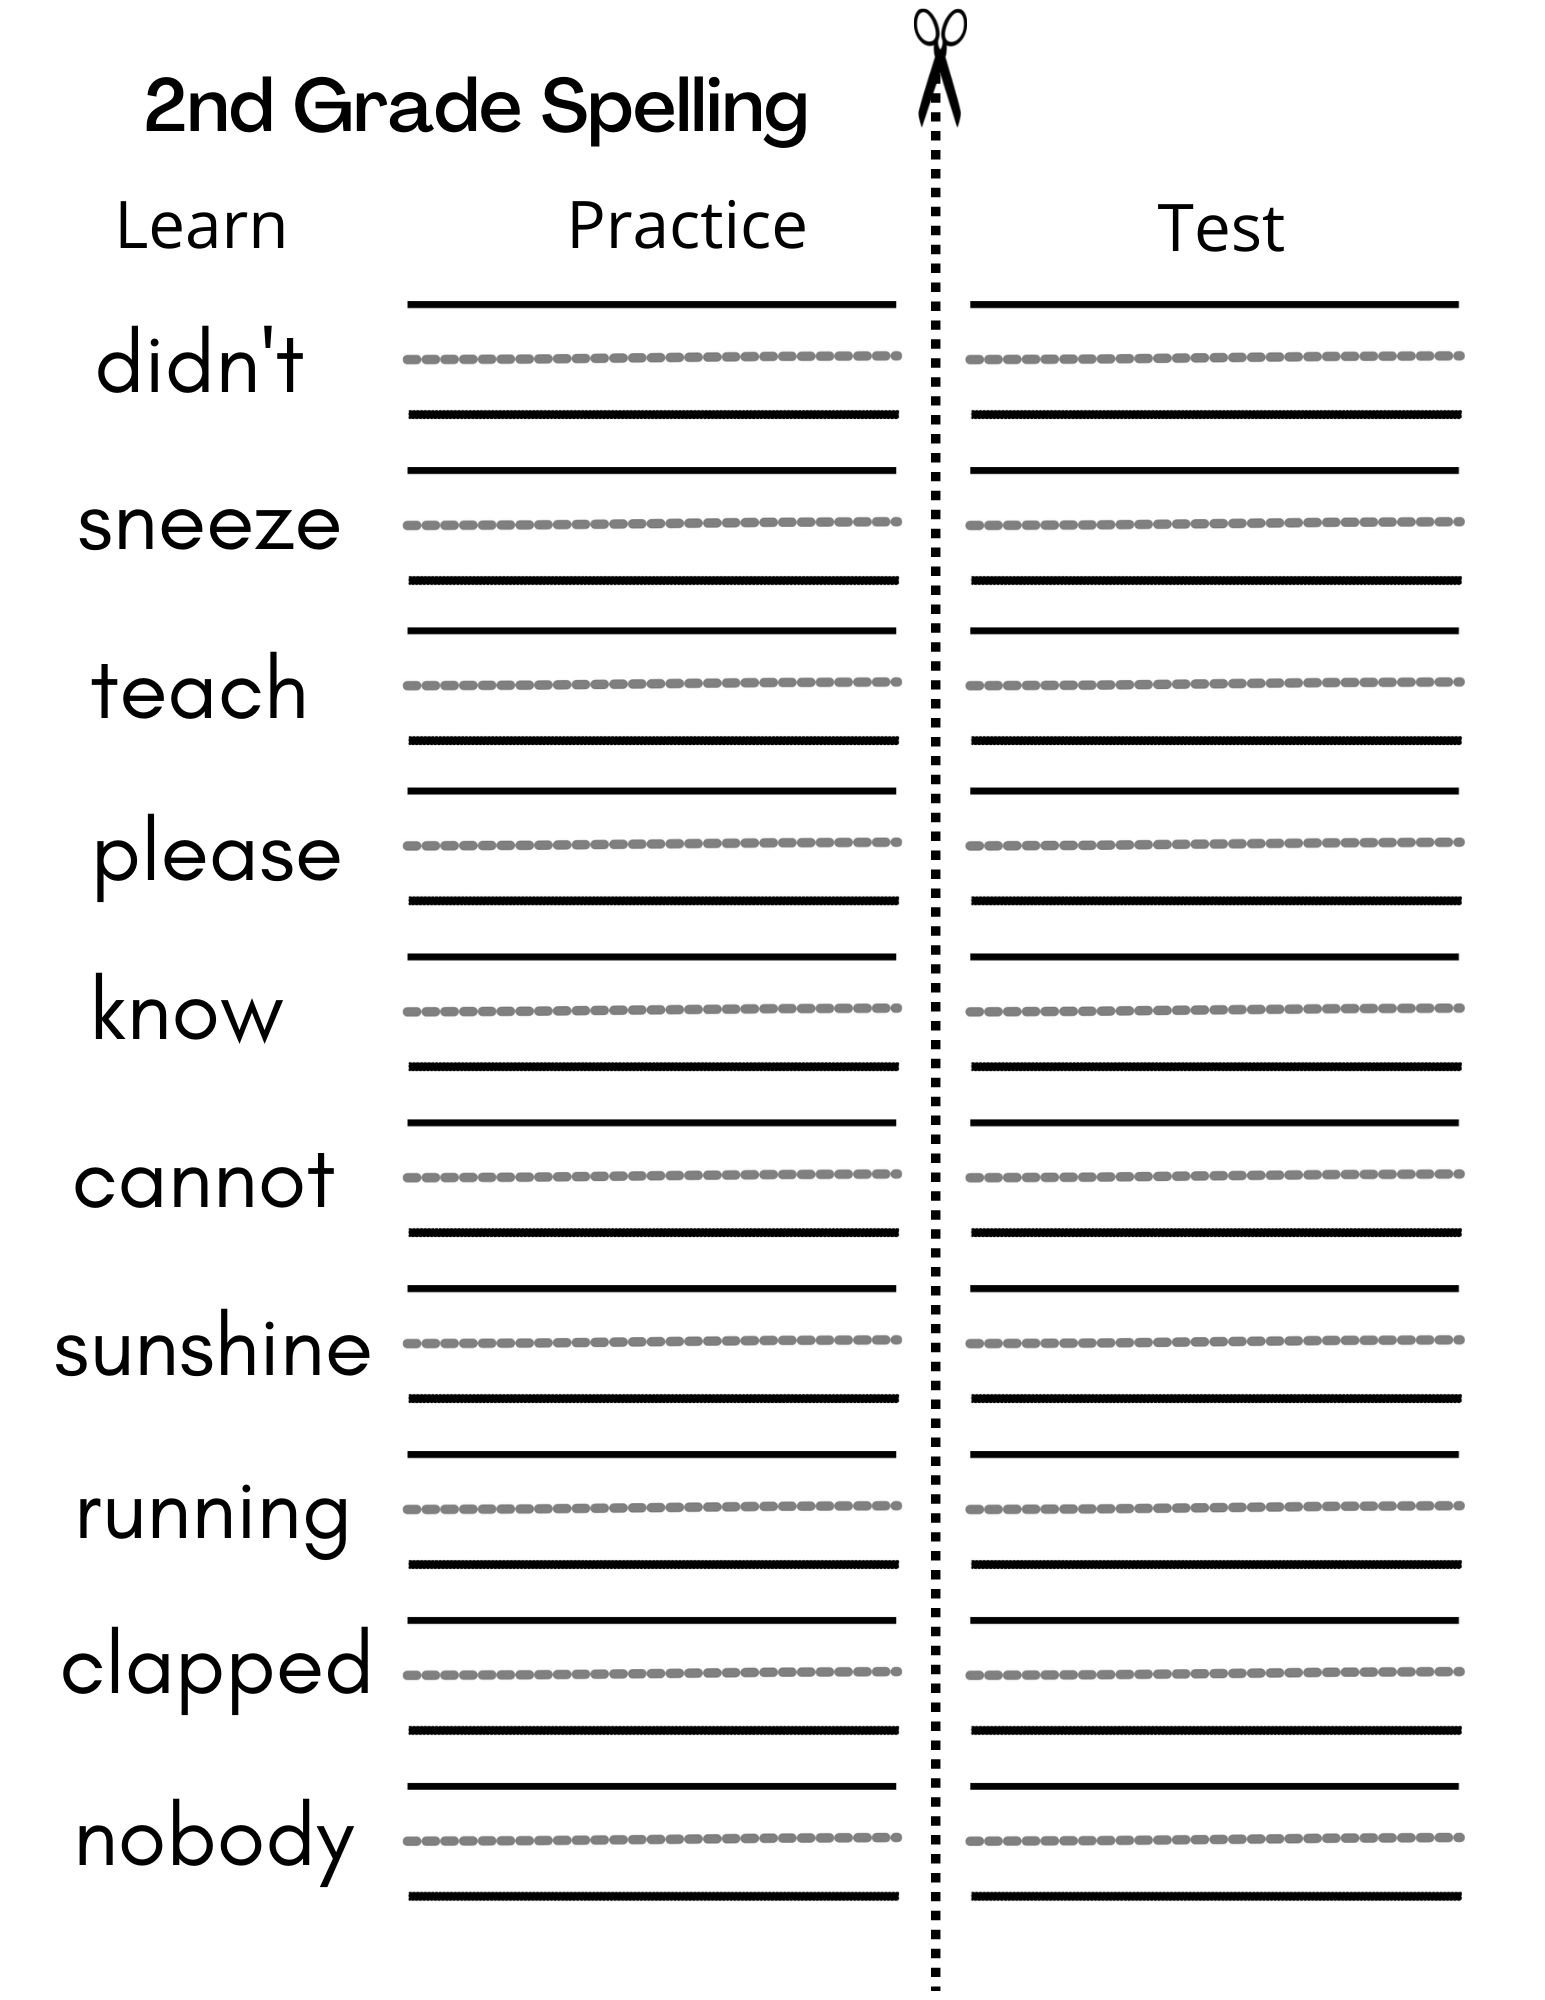 8 Printable Second Grade Writing Spelling Worksheets Spelling Test Etsy